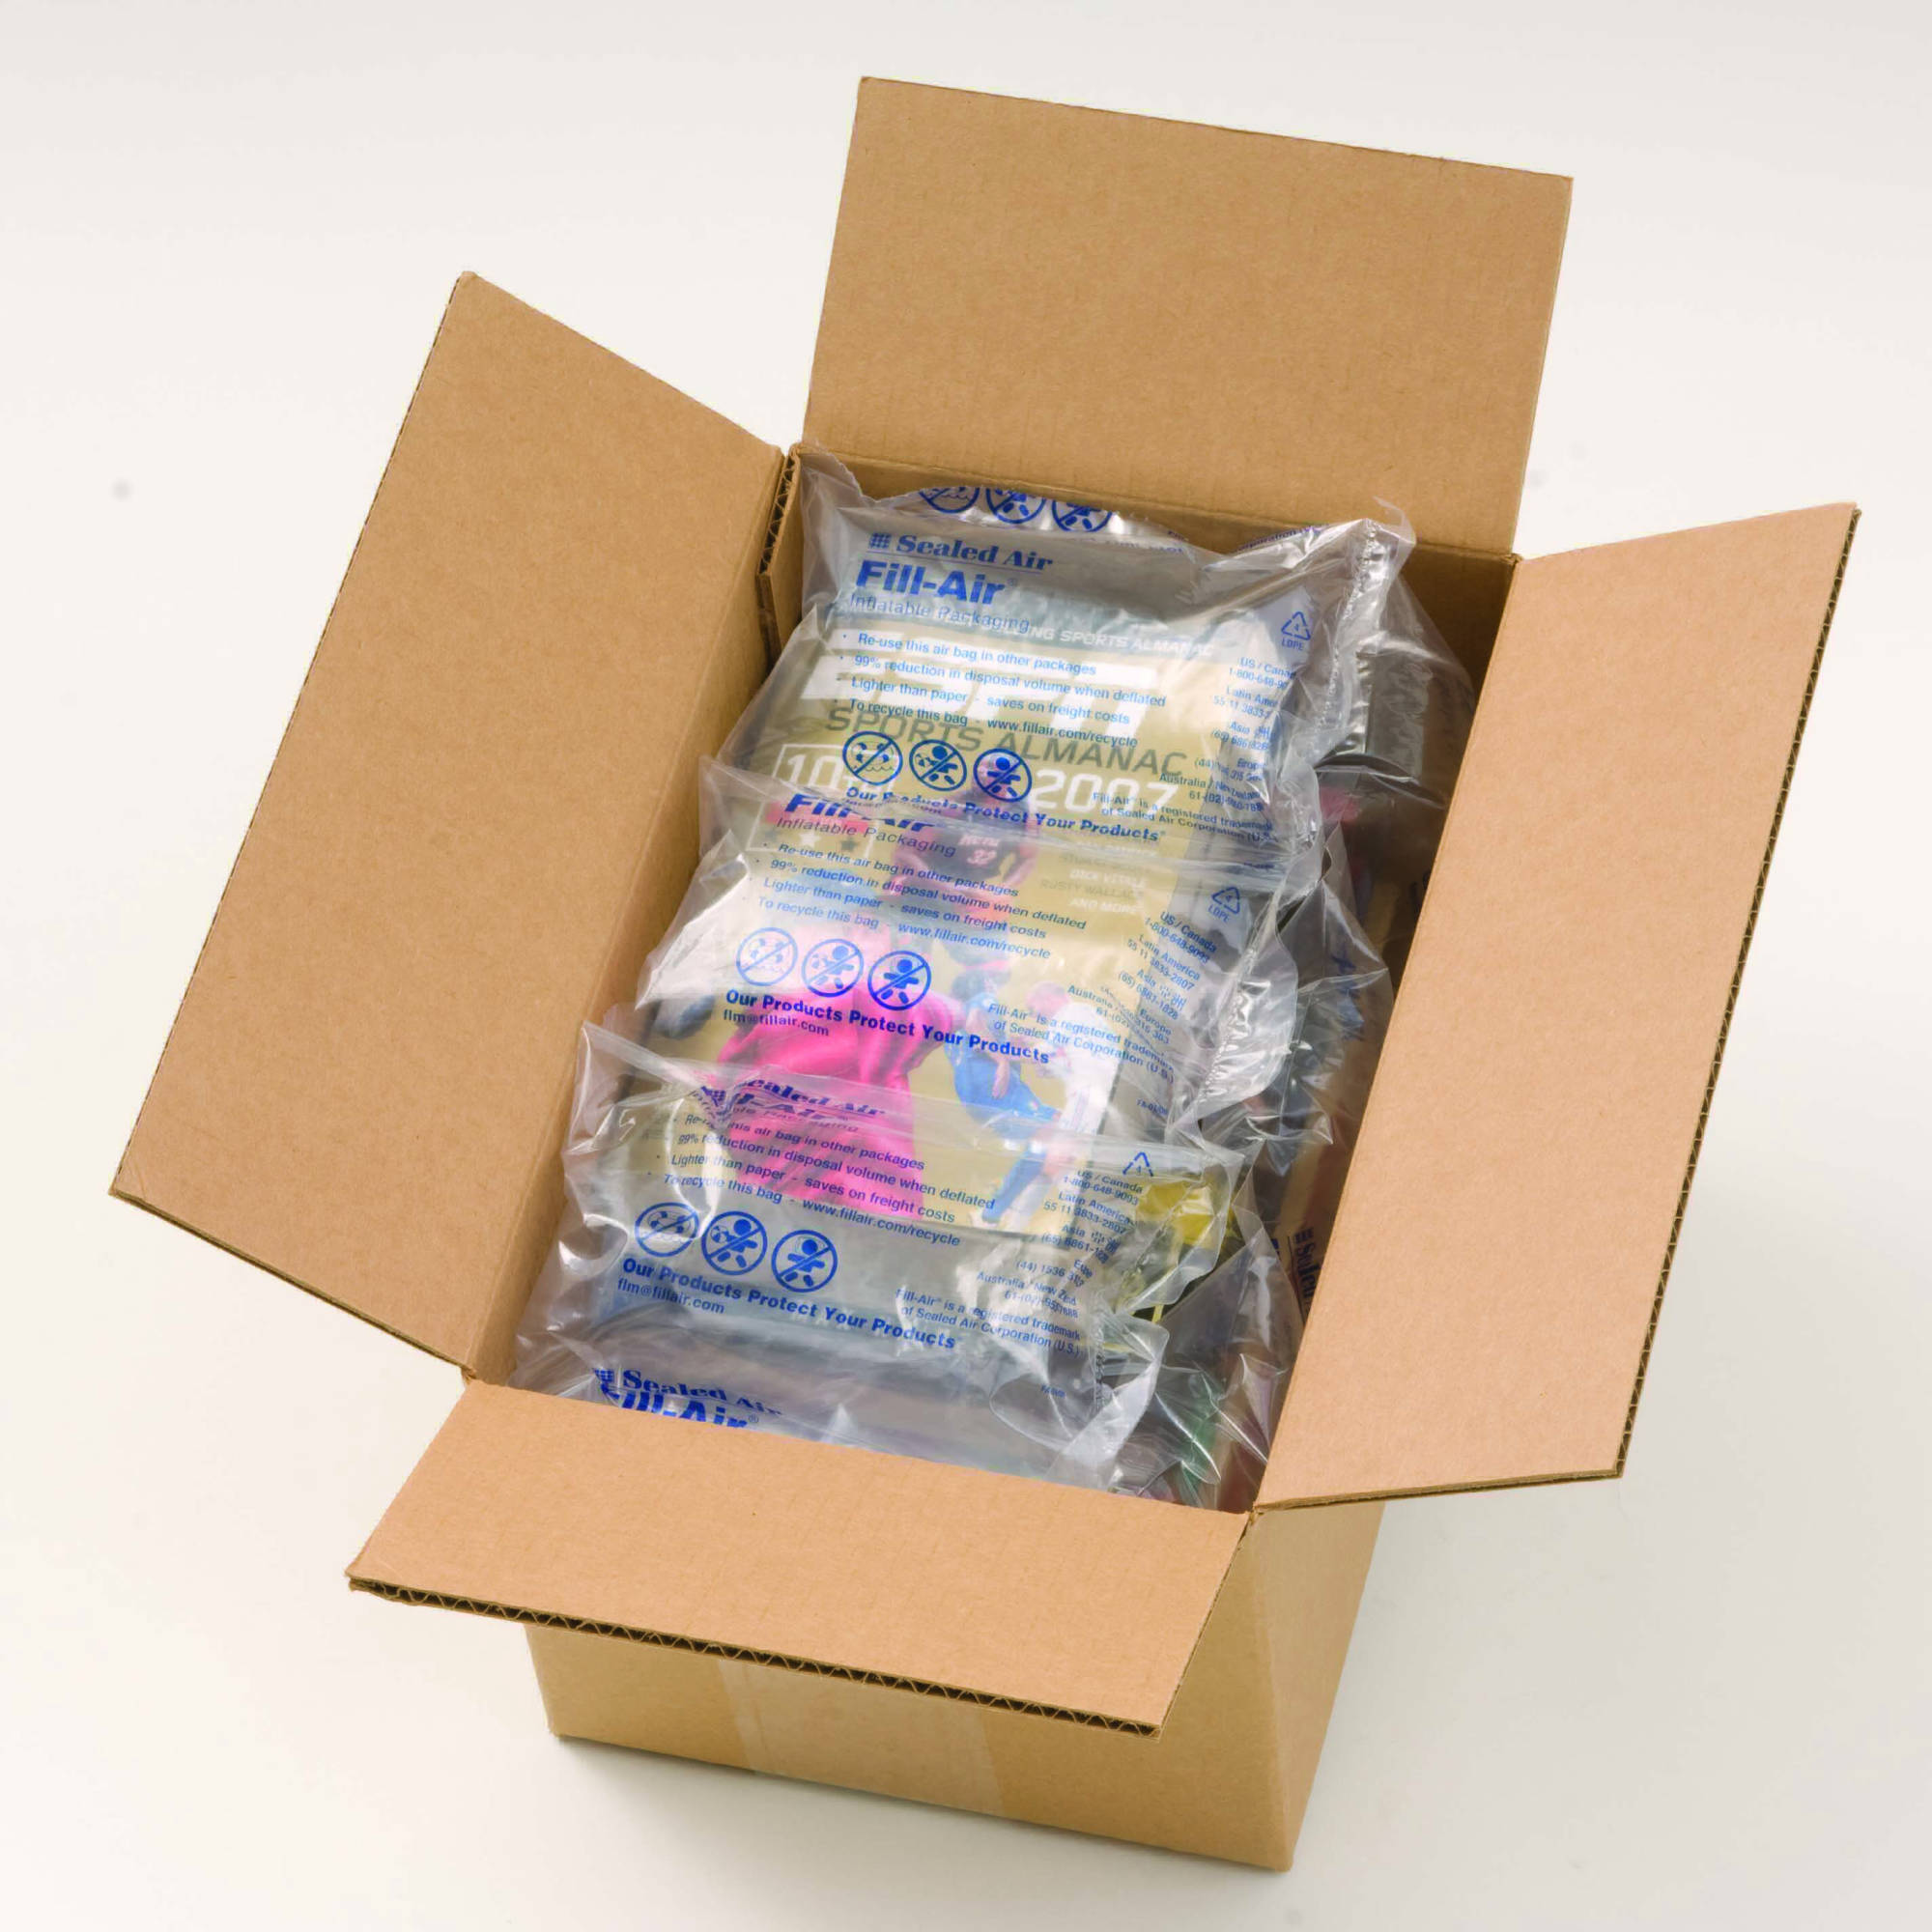 Упаковка для товаров озон pvlogistic ru